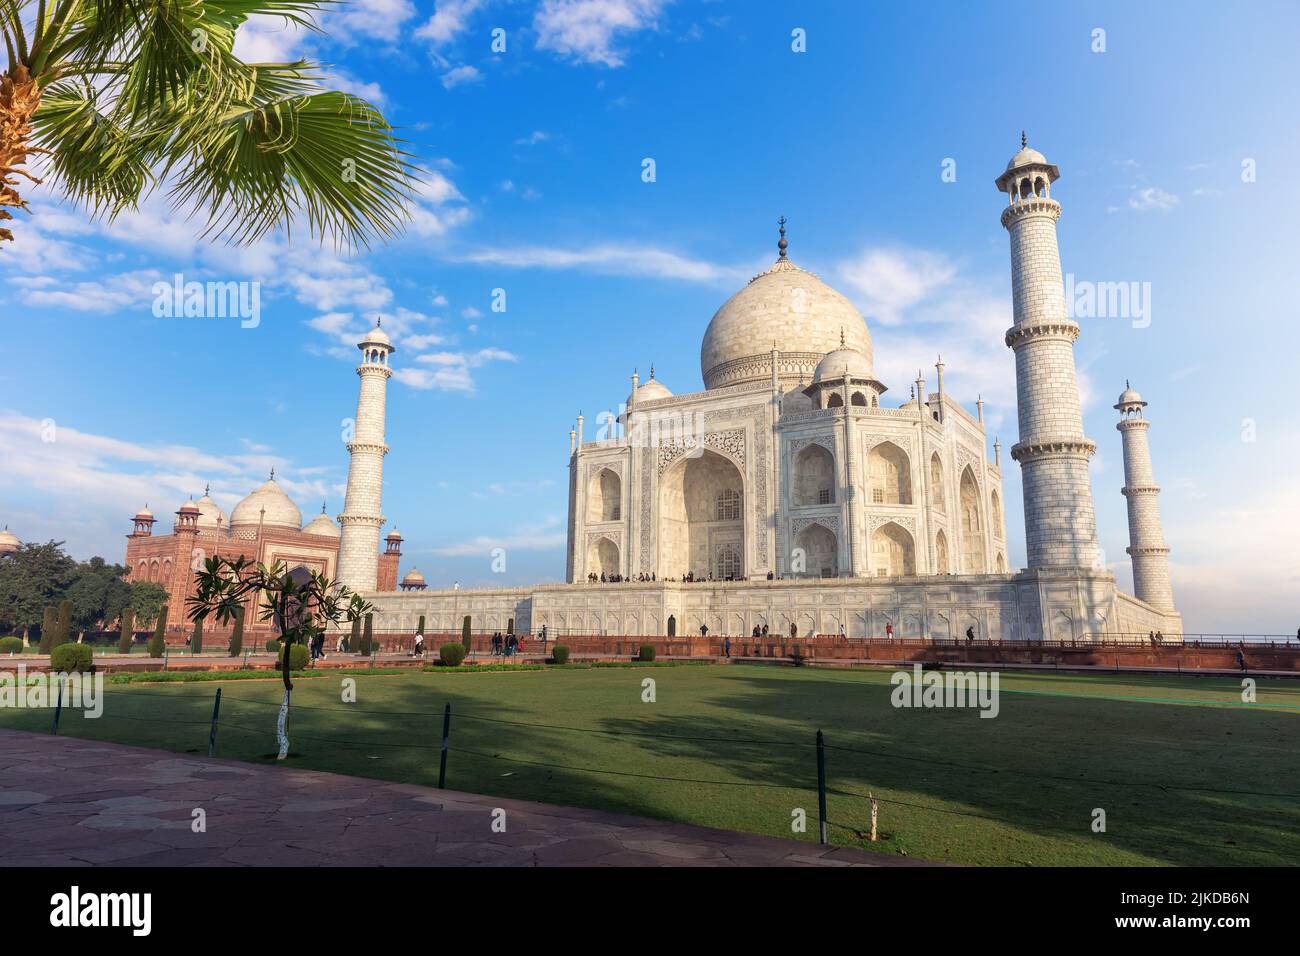 Taj Mahal Tomb and the mosque view, India, Agra. Stock Photo